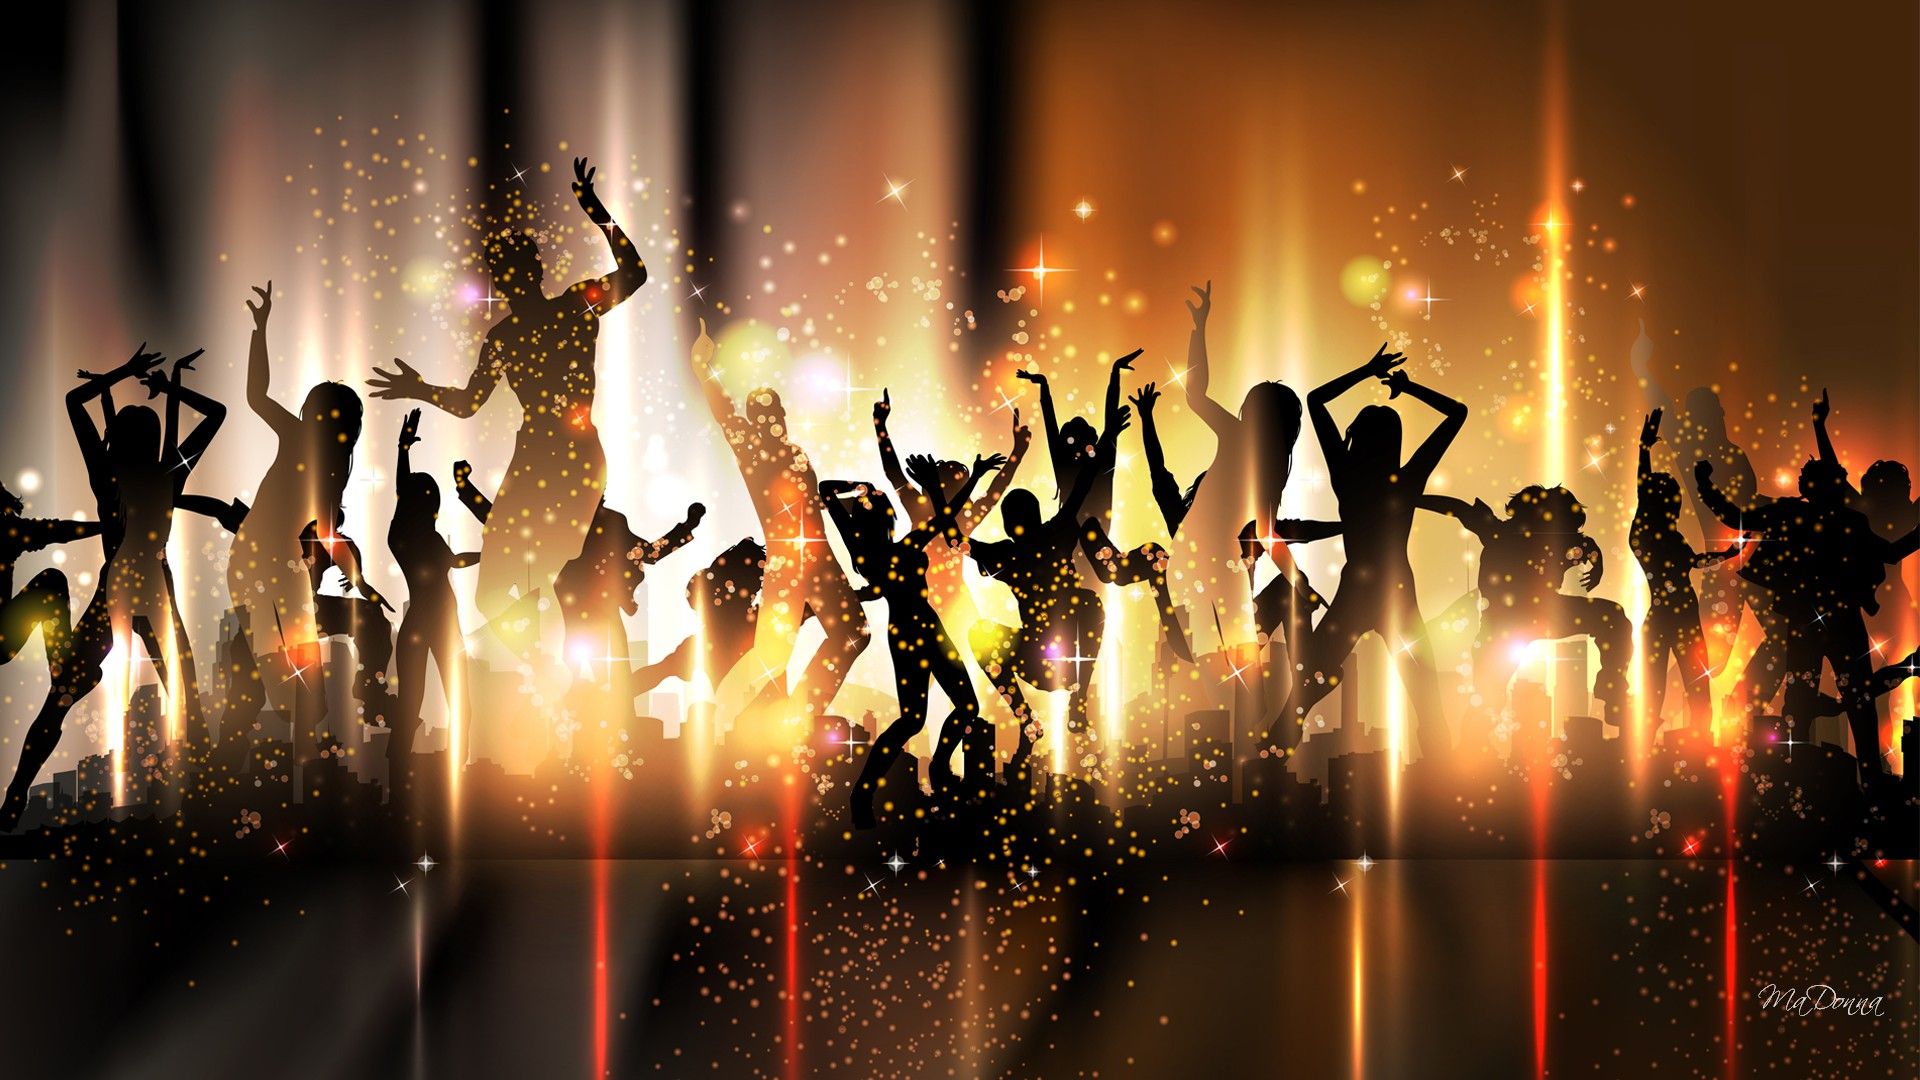 Free download Dance Party wallpaper ForWallpapercom [1920x1080] for your Desktop, Mobile & Tablet. Explore Party Wallpaper. Party Wallpaper Background, Black Light Party Wallpaper, Tea Party Wallpaper